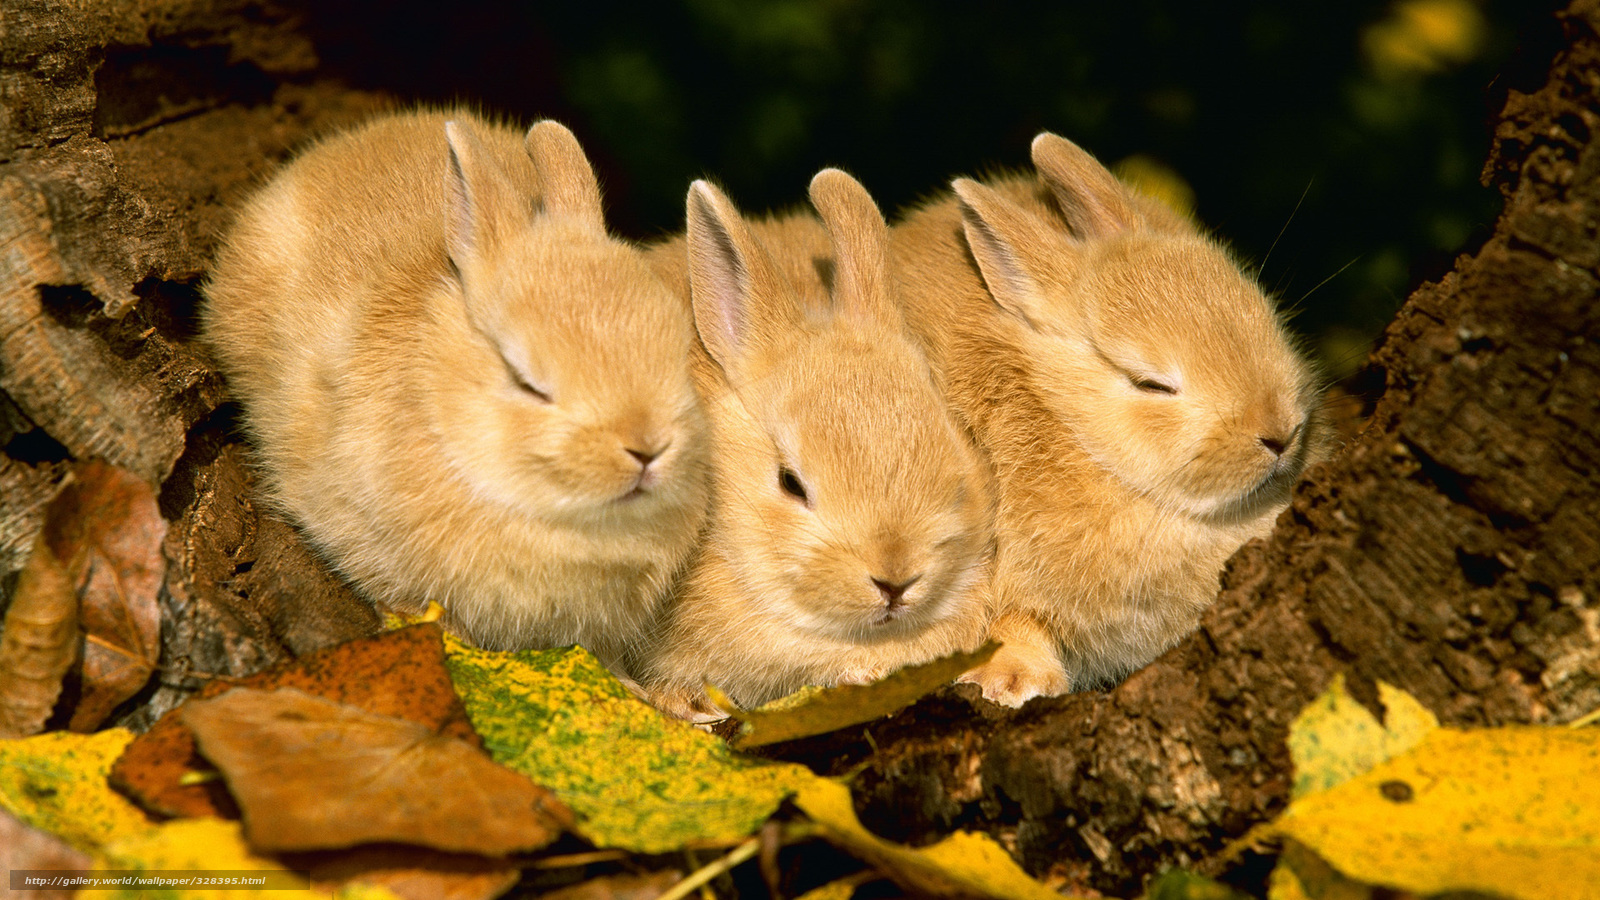 Wallpaper Rabbits Animals Foliage Autumn Desktop